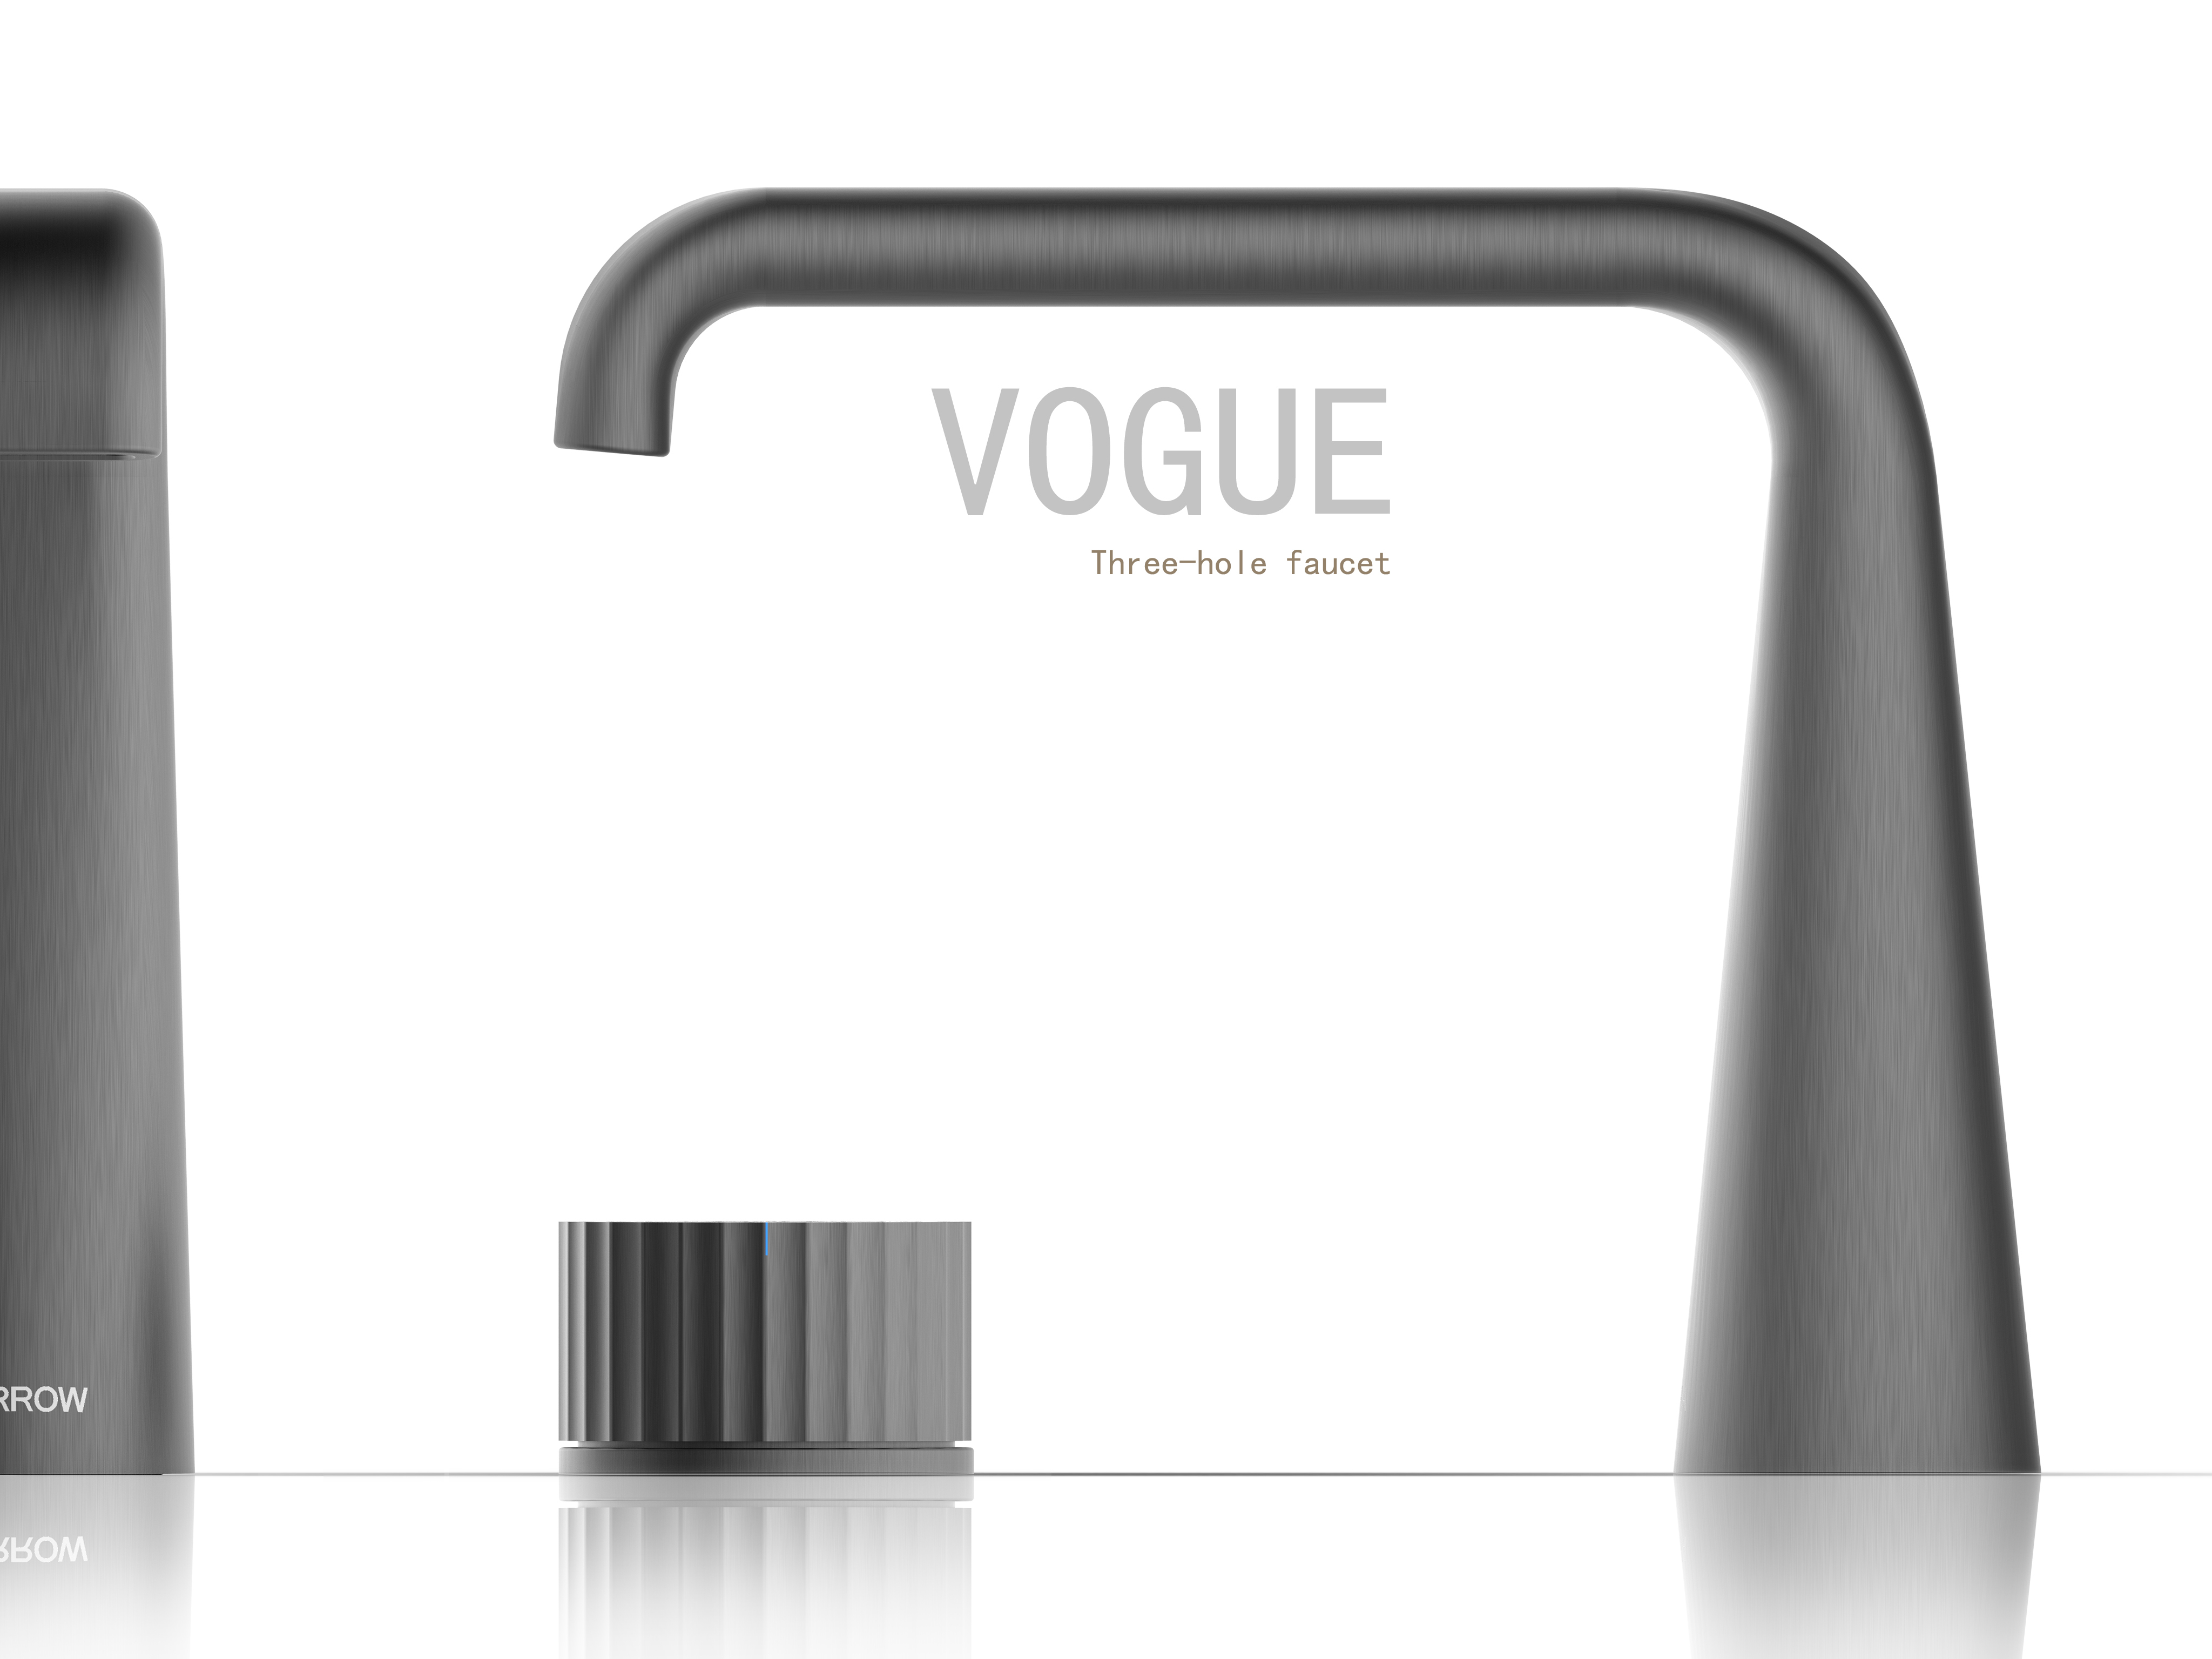 VOGUE Three-hole faucet